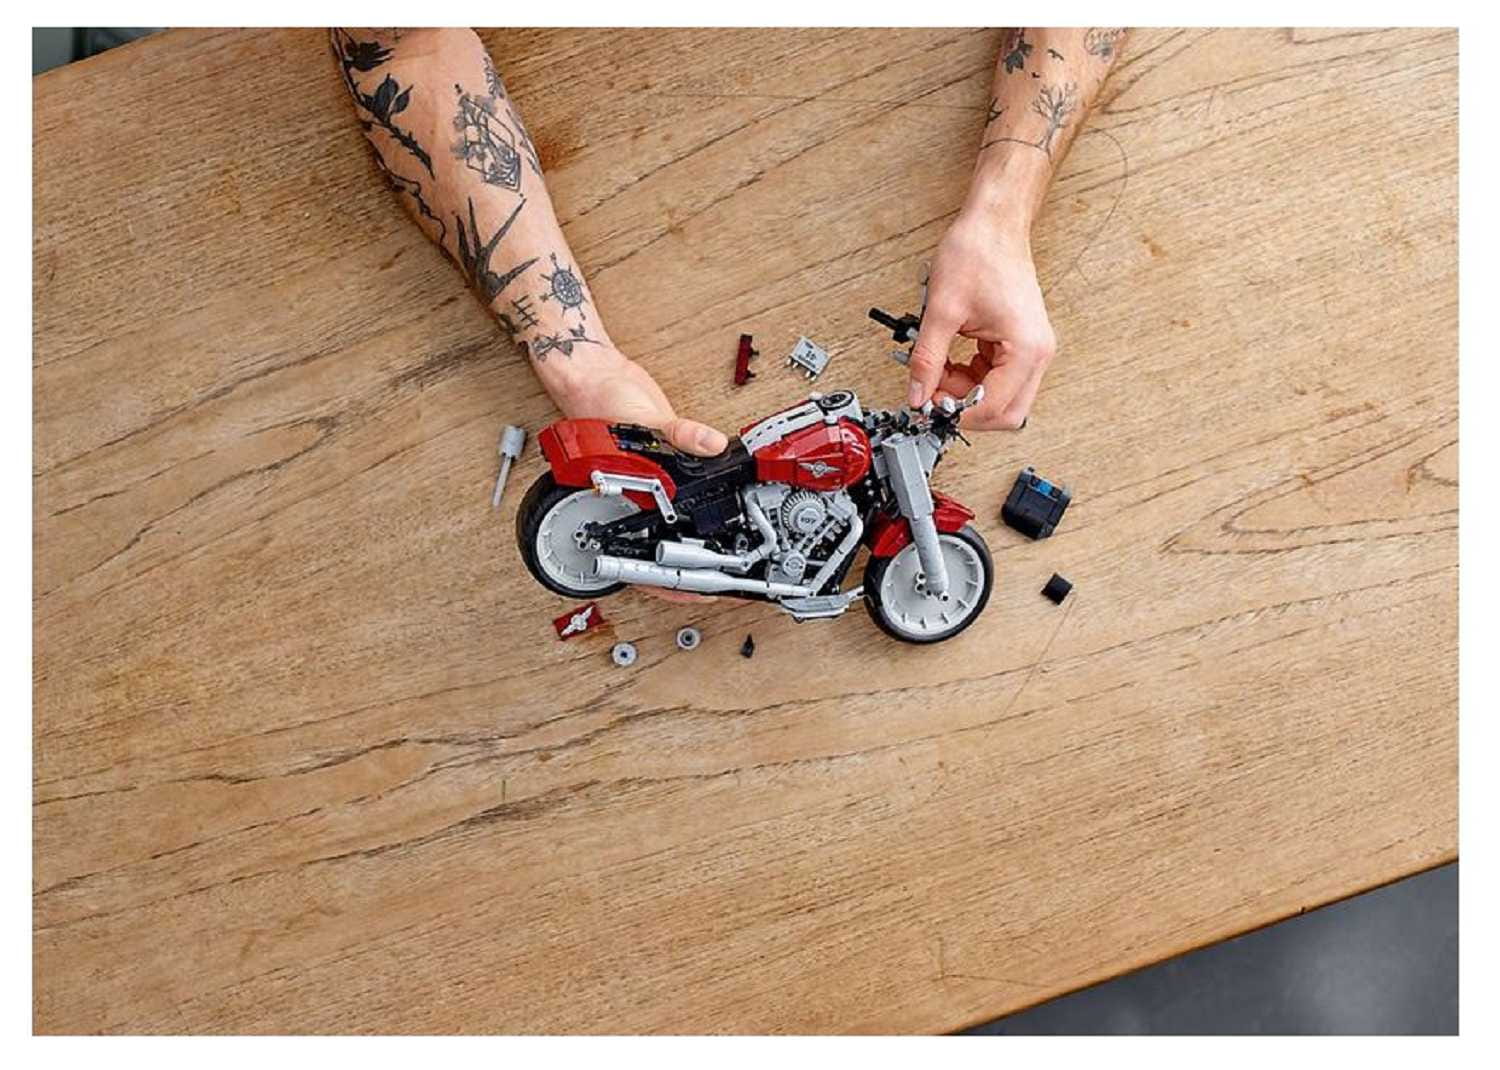 LEGO Harley Davidson Fat Boy Creator Exklusiv Set